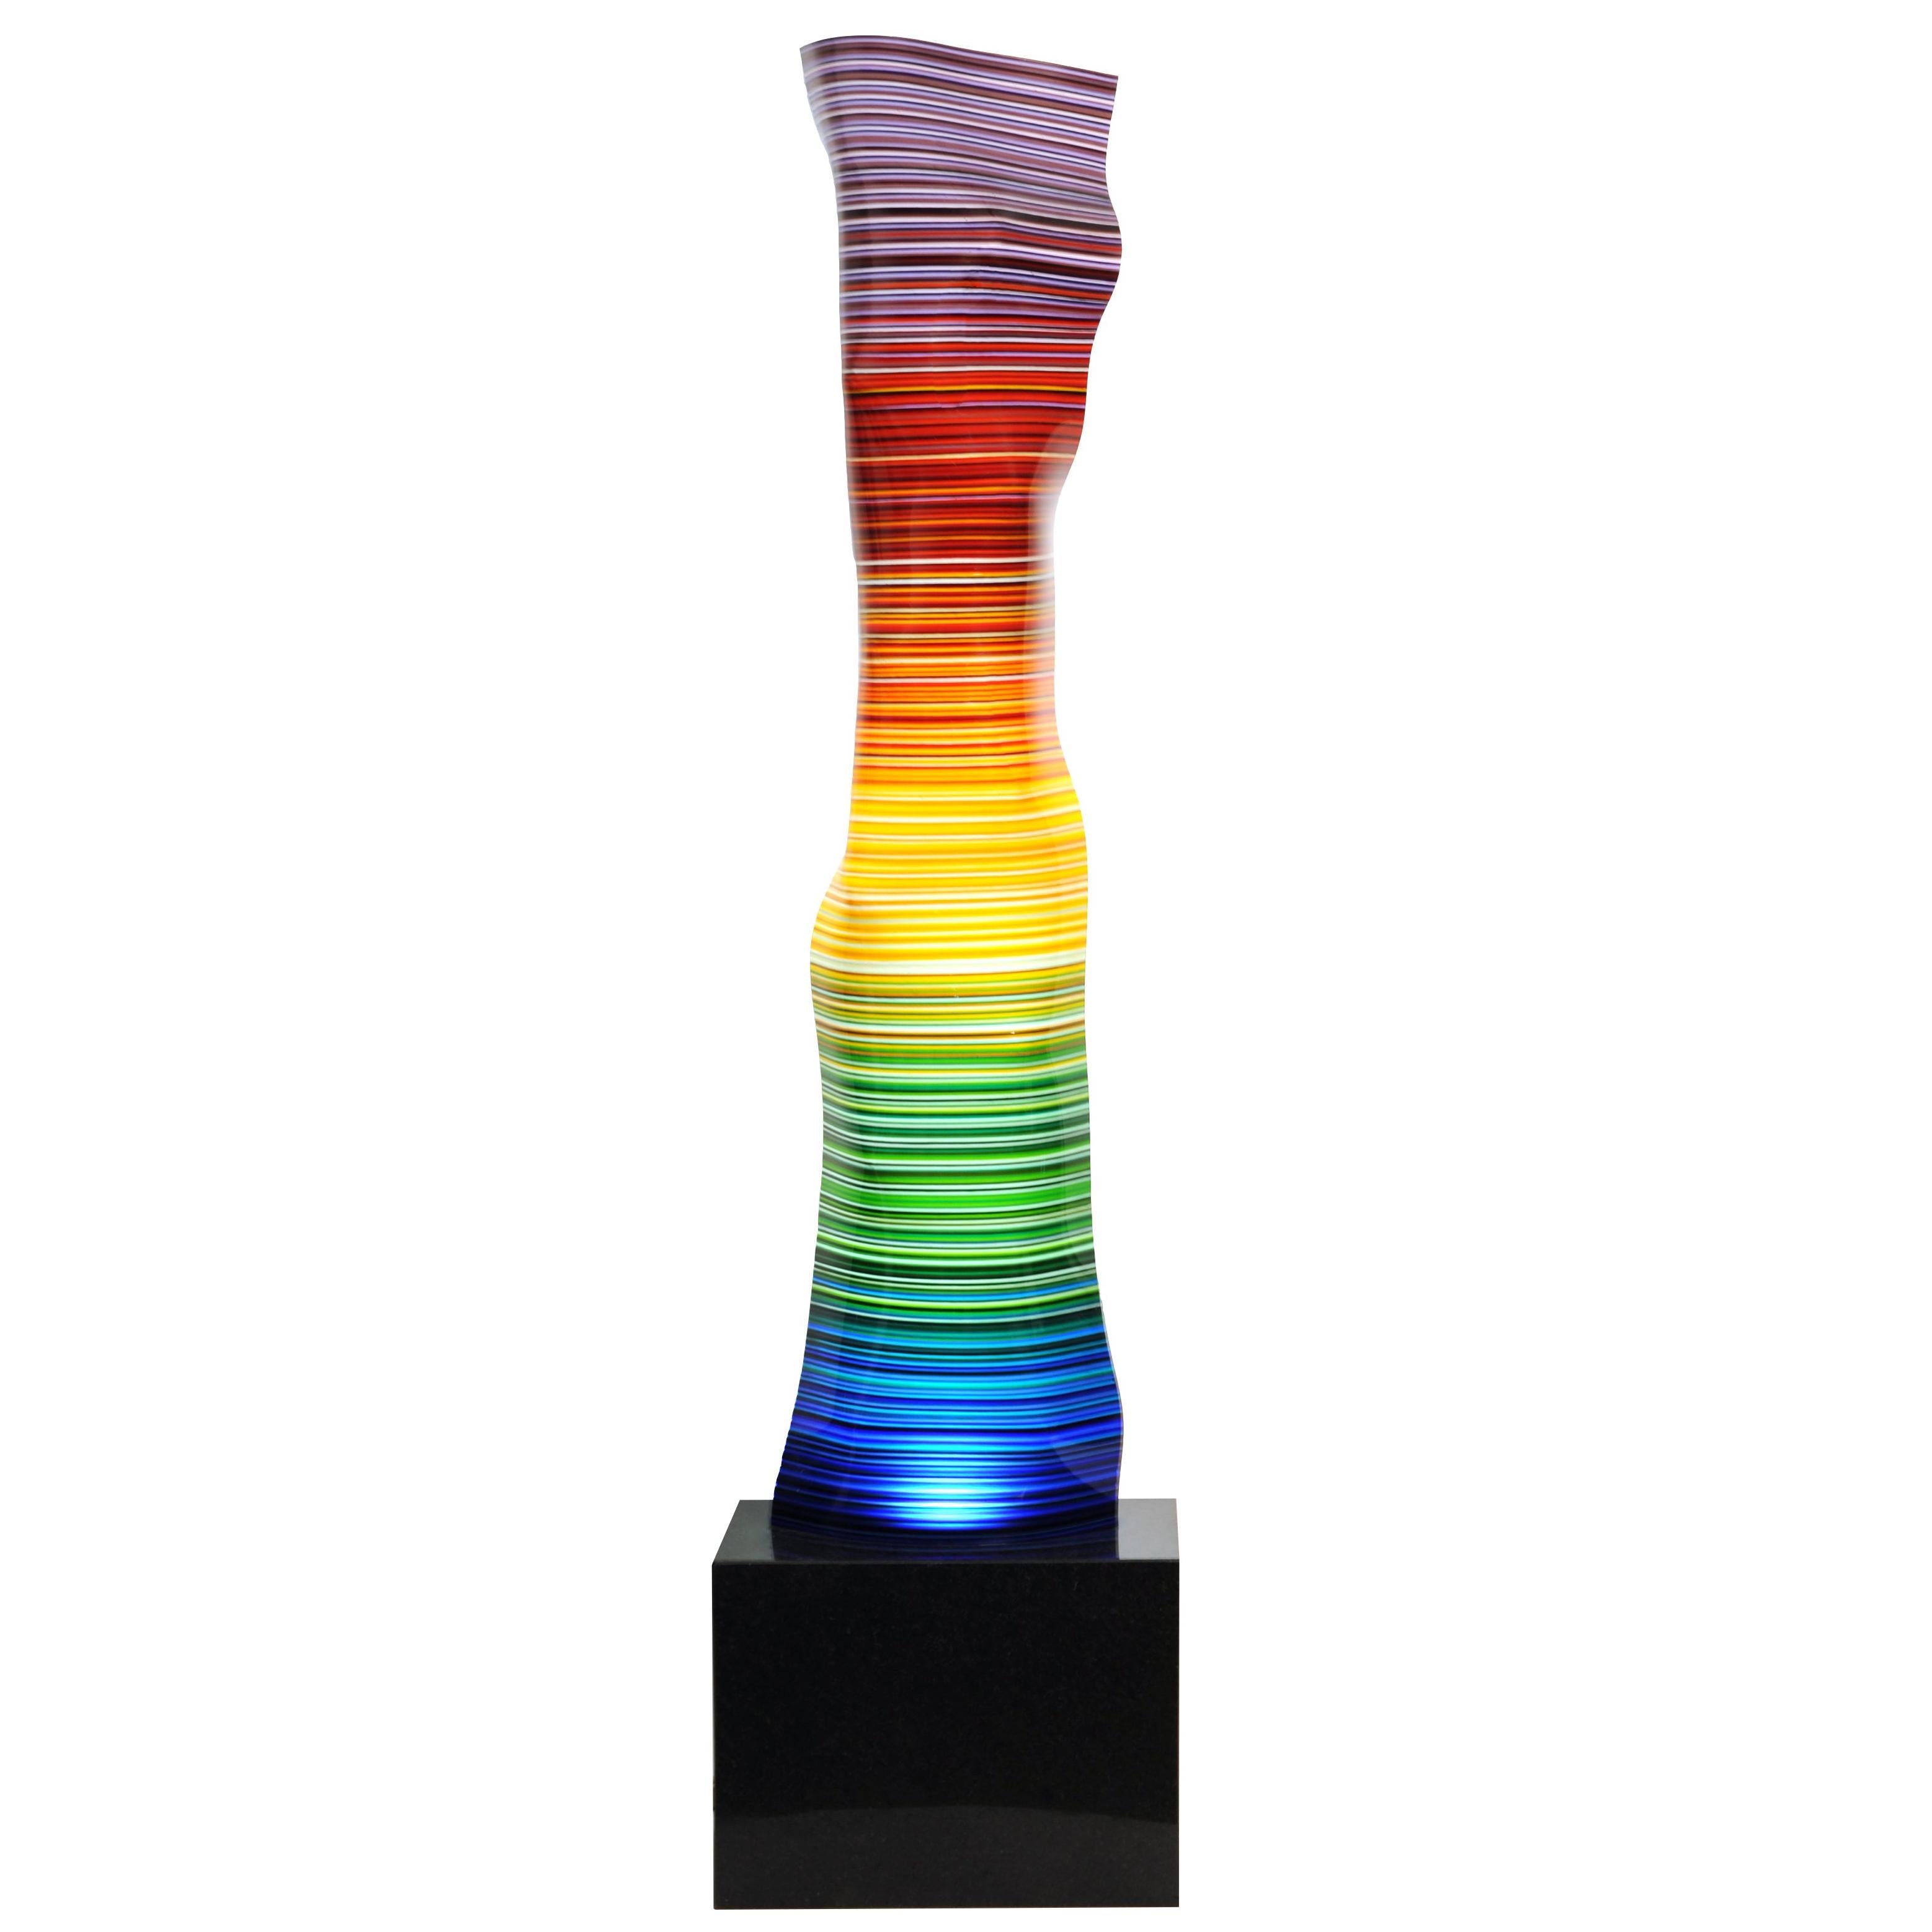 Magikarpet Linear Rainbow Barcode Glass Lamp over Black Granite Lighting Base (lampe en verre à code-barres arc-en-ciel sur socle en granit noir)